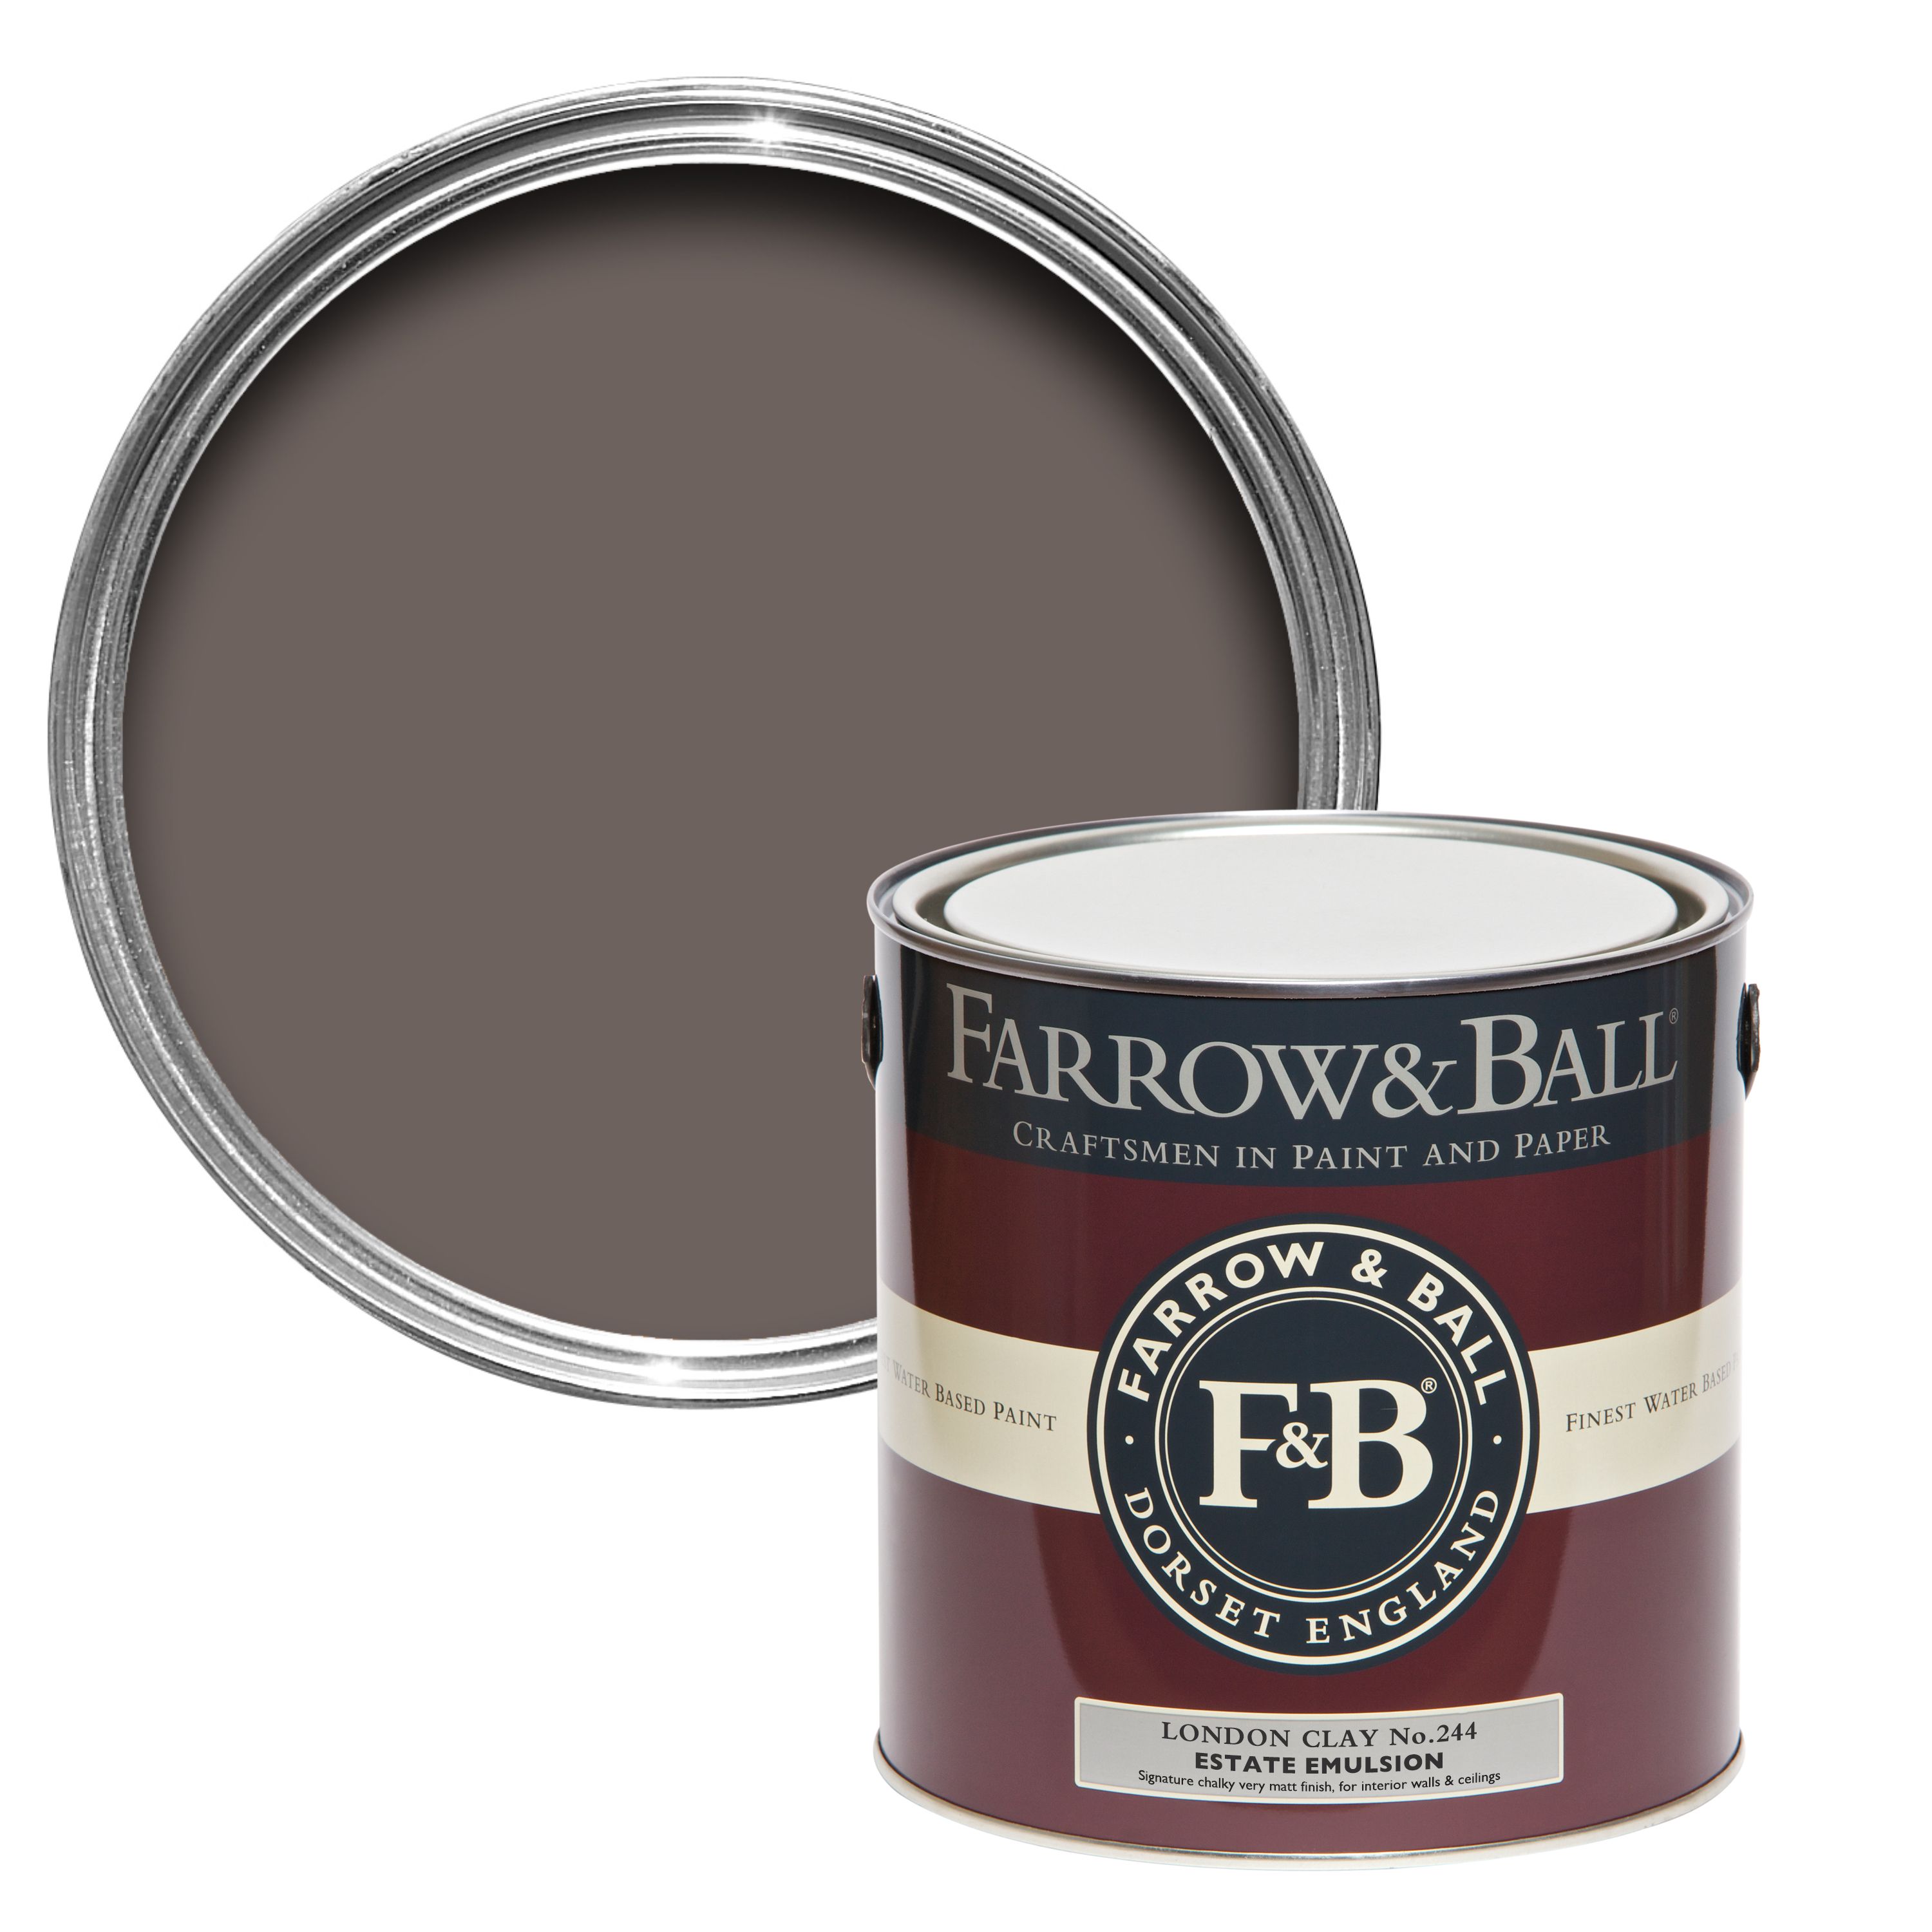 Farrow & Ball Estate London clay No.244 Matt Emulsion paint, 2.5L Tester pot